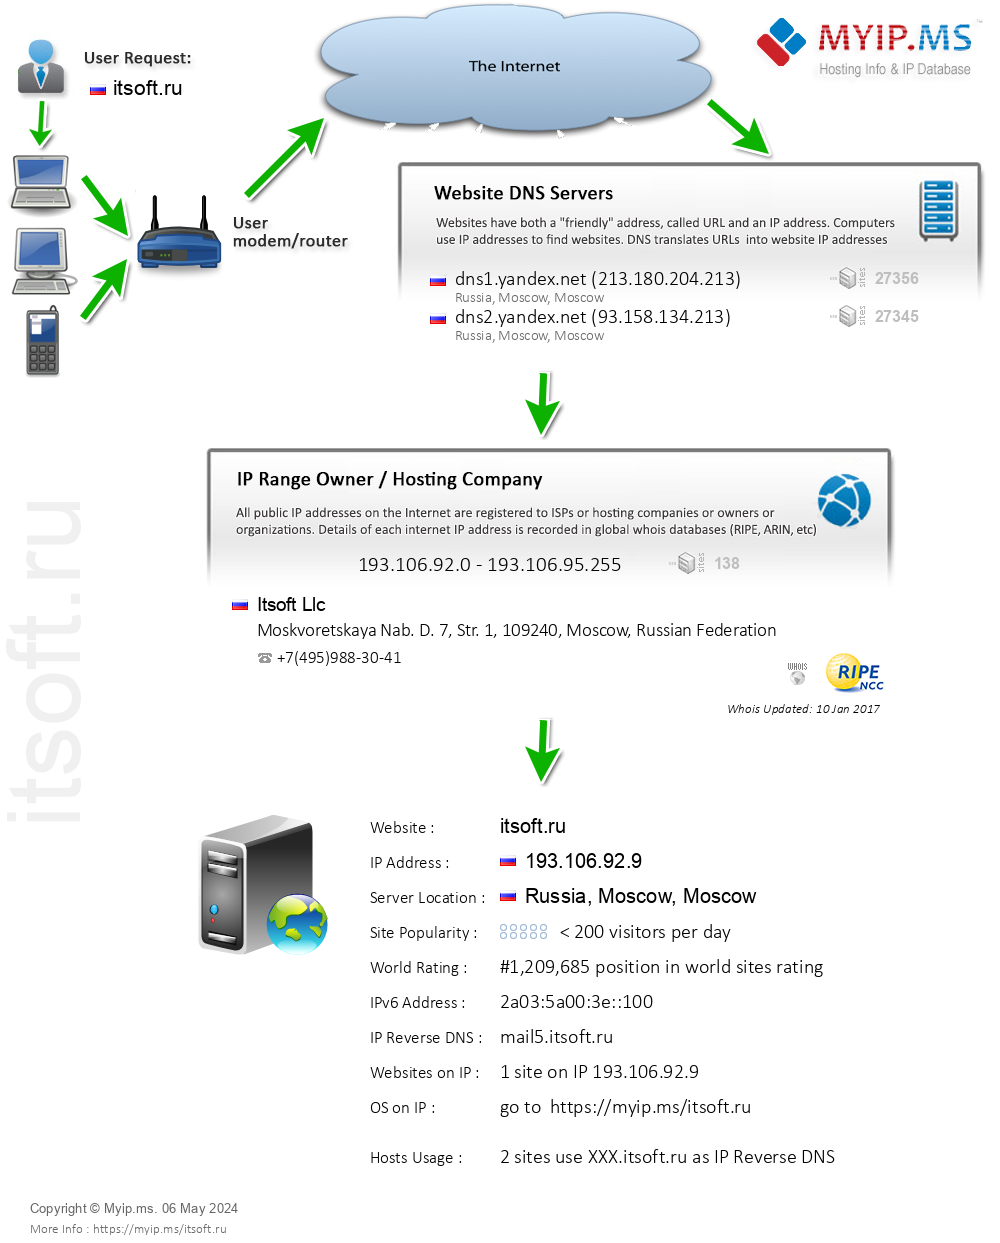 Itsoft.ru - Website Hosting Visual IP Diagram